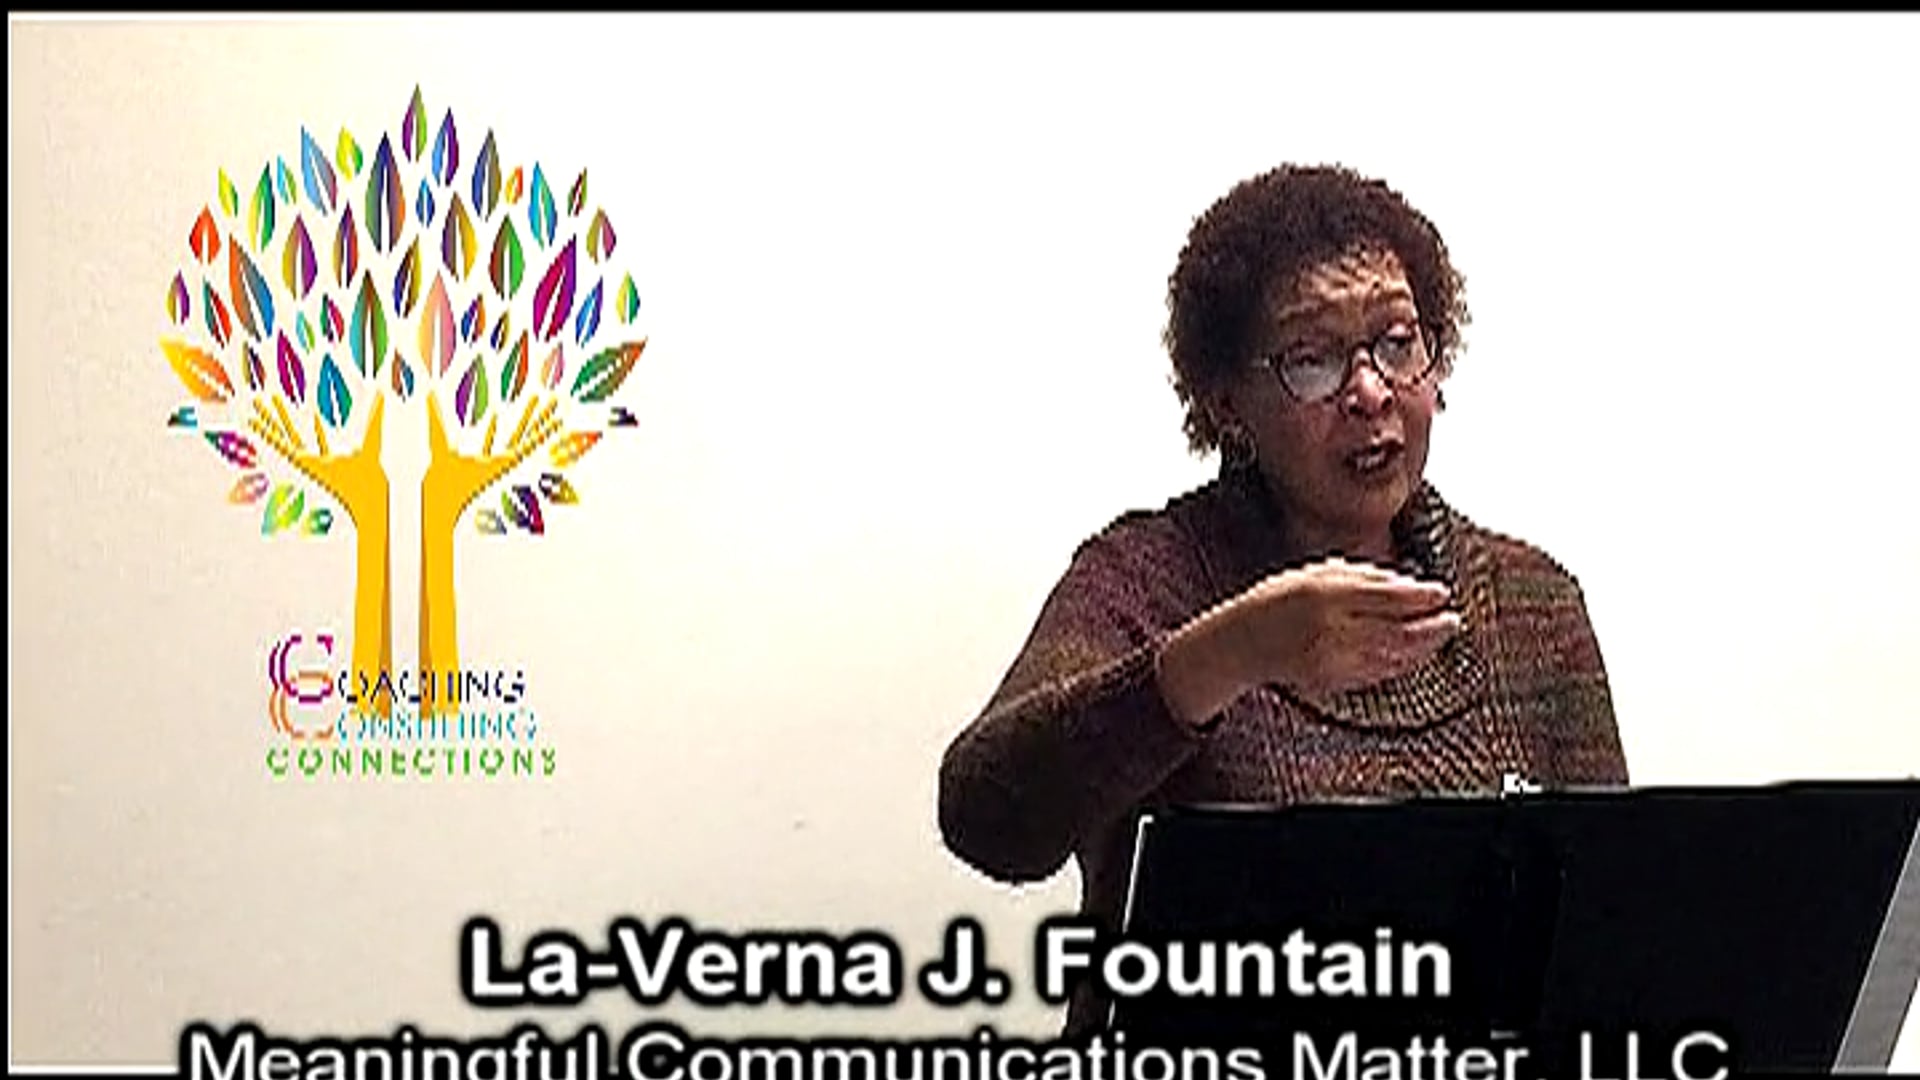 Life Coach Certification Testimonial: La-Verna J. Fountain